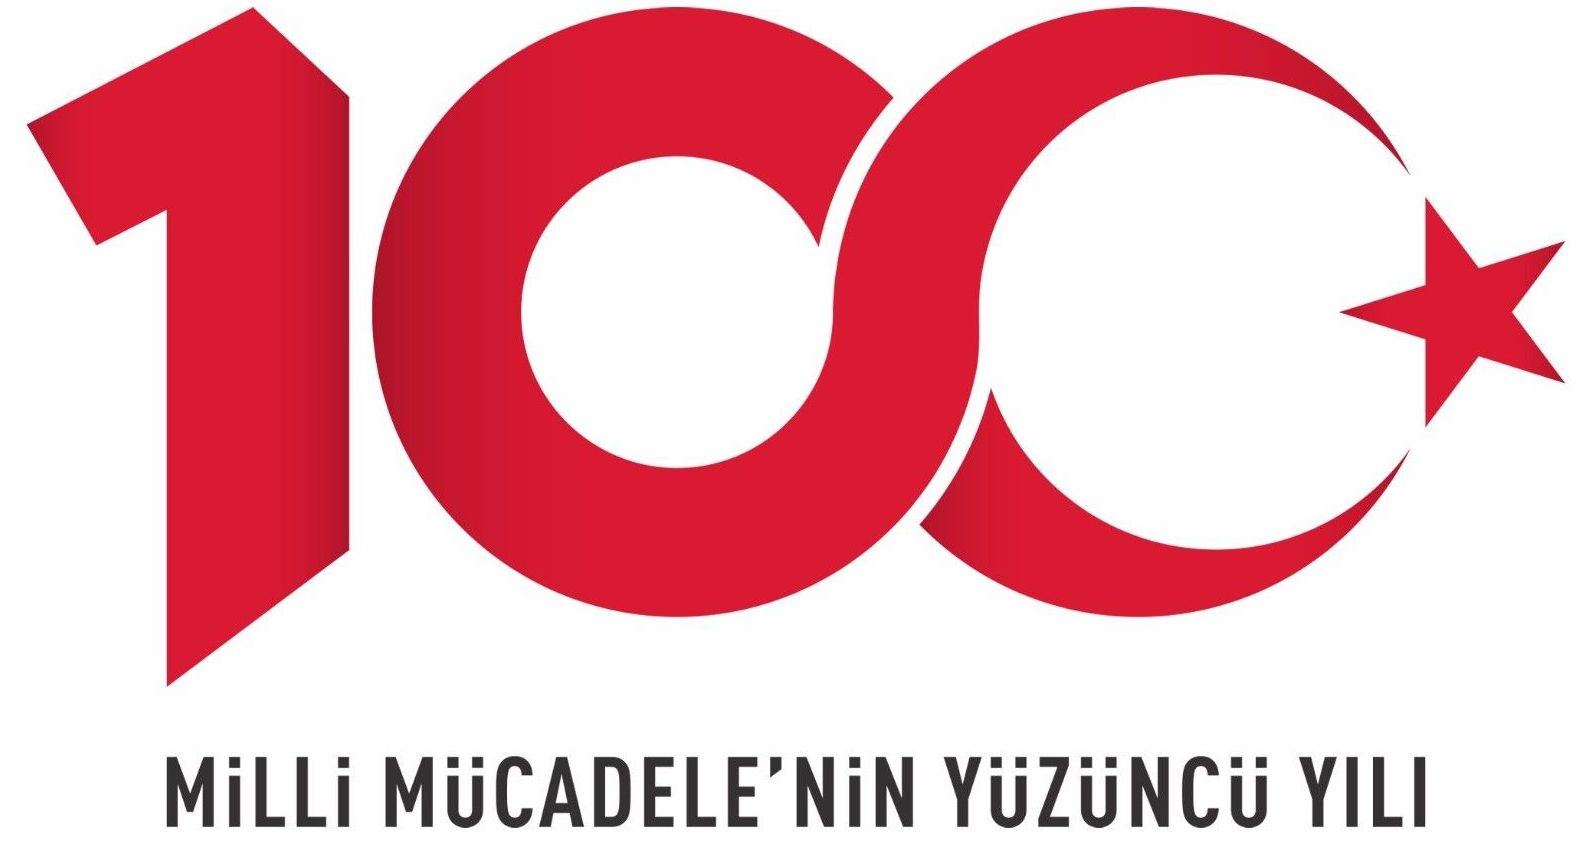 19 Mayıs 100. yılına özel logo hazırlandı